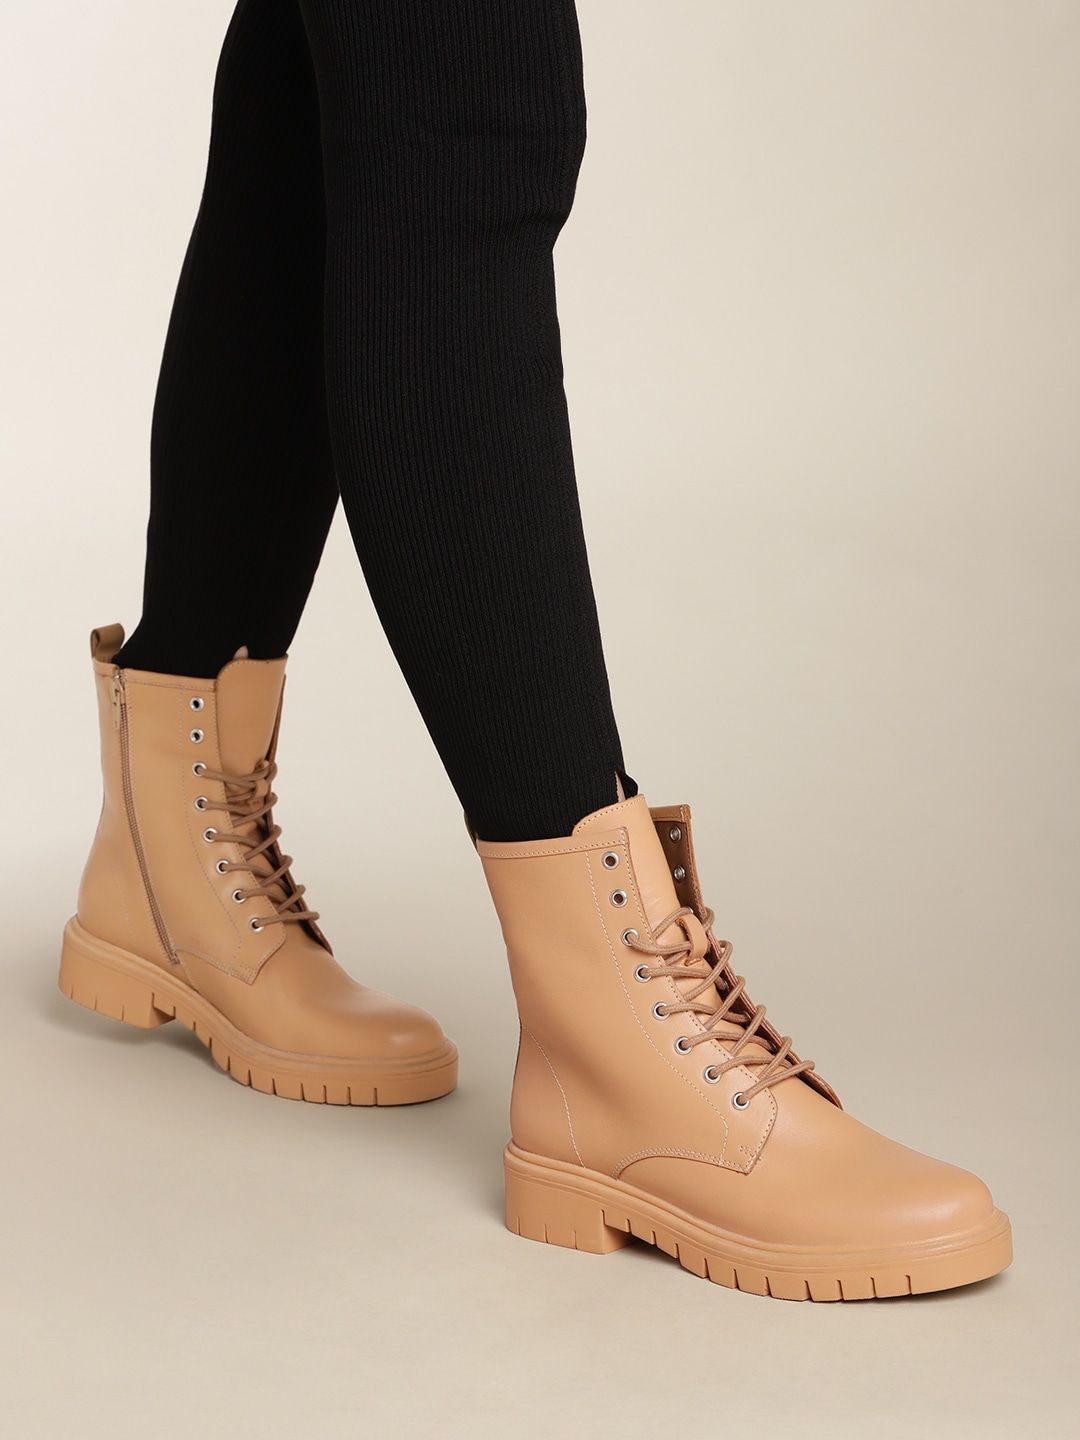 Nautica Women Brown High-Top Flat Boots Price in India